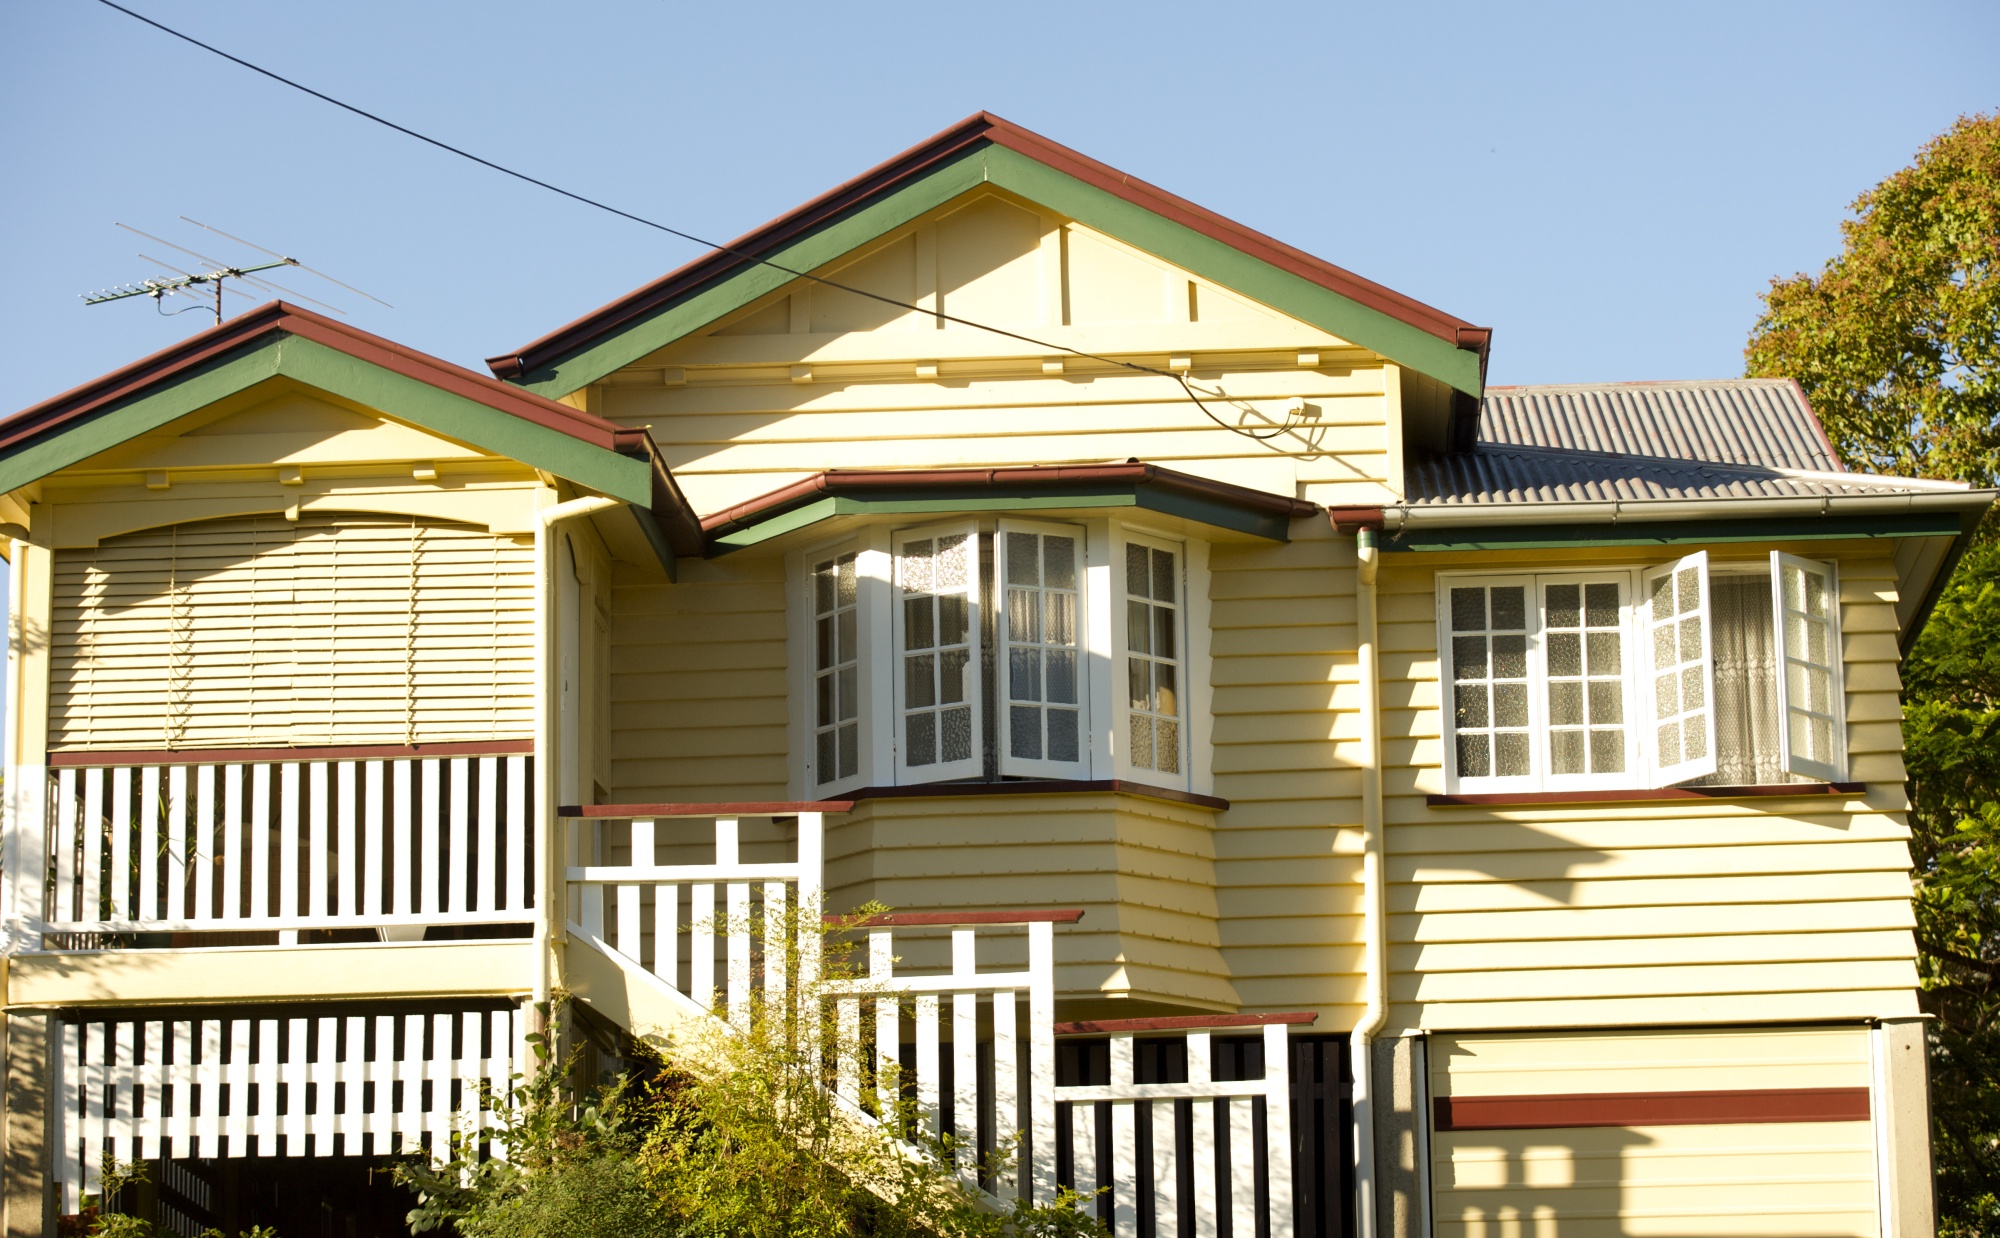 Australia's Queenslander Homes Are Making a Comeback - Bloomberg